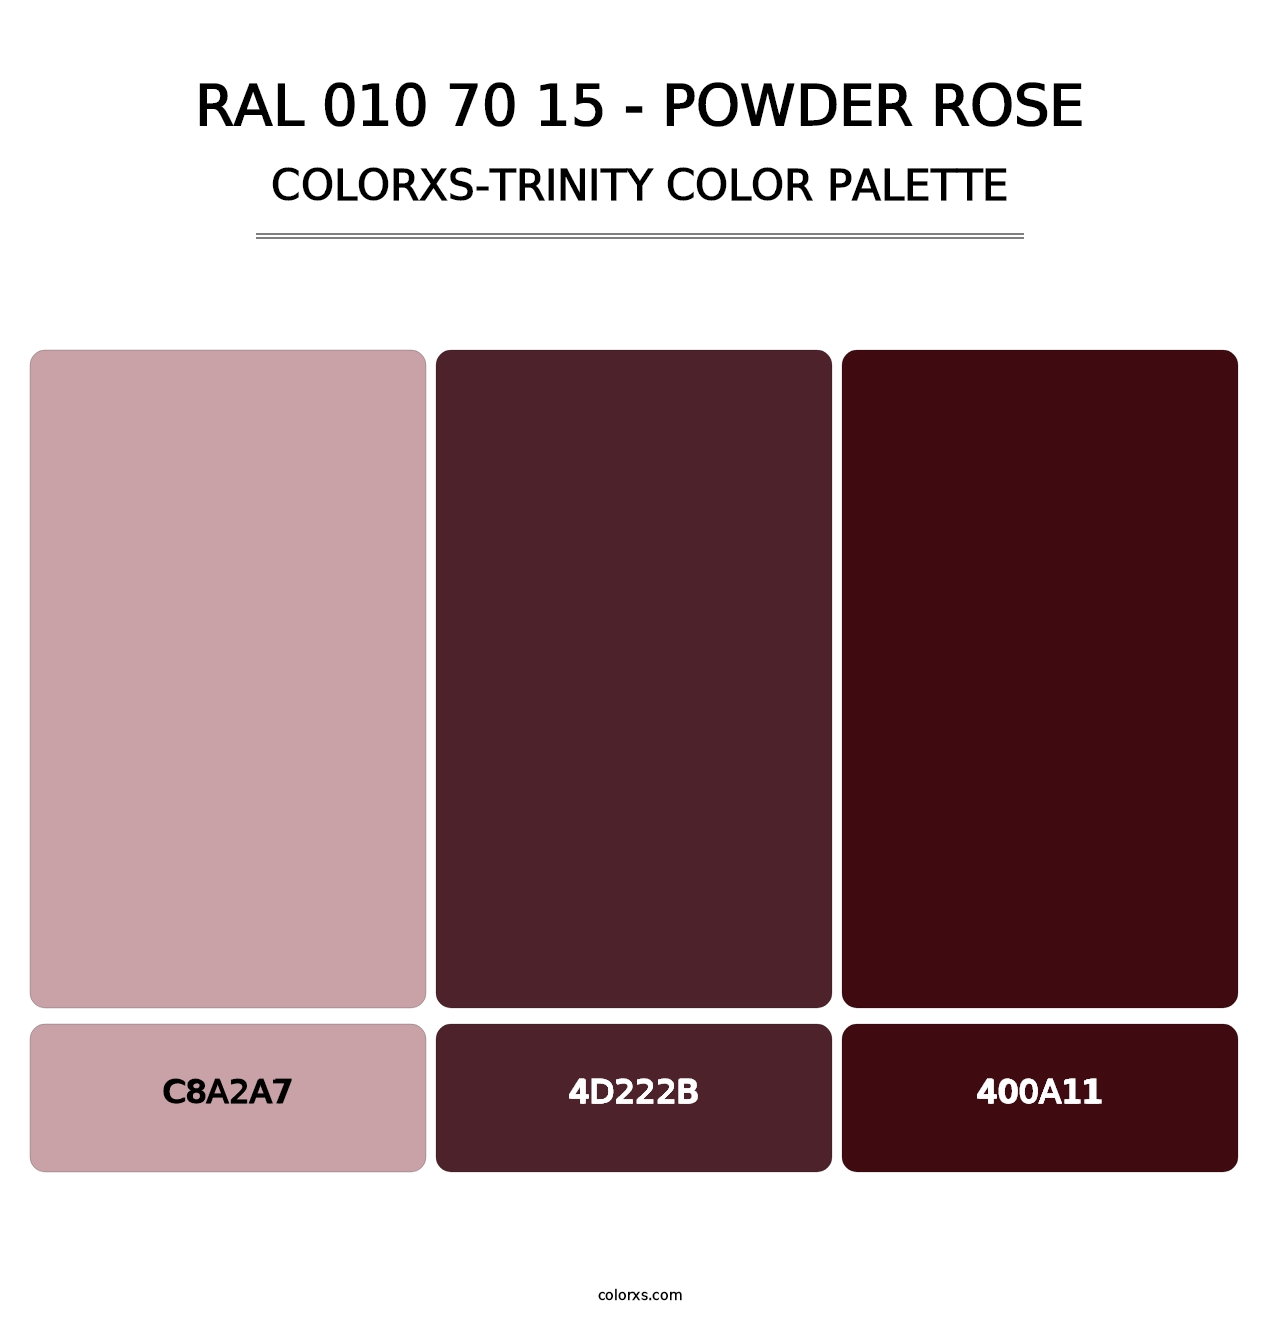 RAL 010 70 15 - Powder Rose - Colorxs Trinity Palette